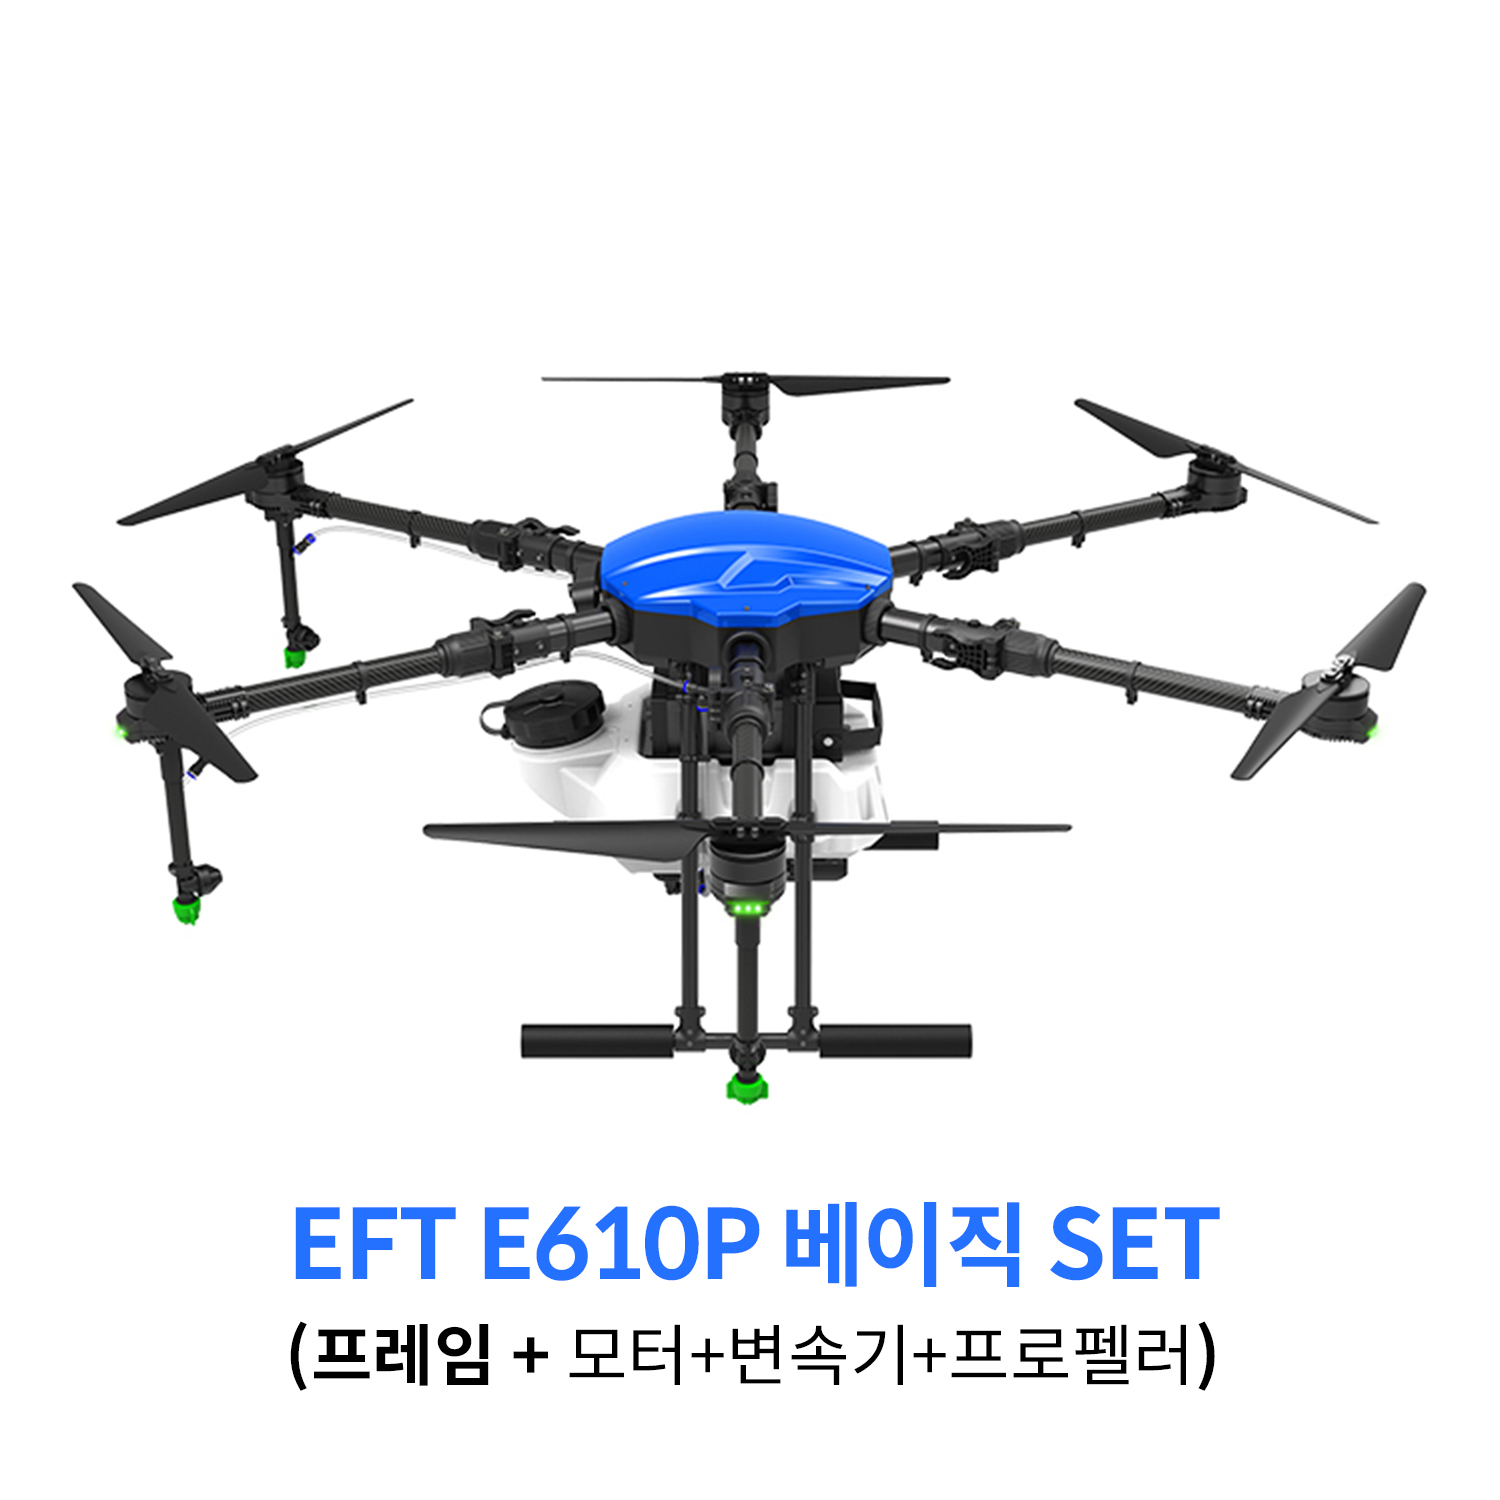 EFT E610P 베이직SET 방제 드론 헬셀